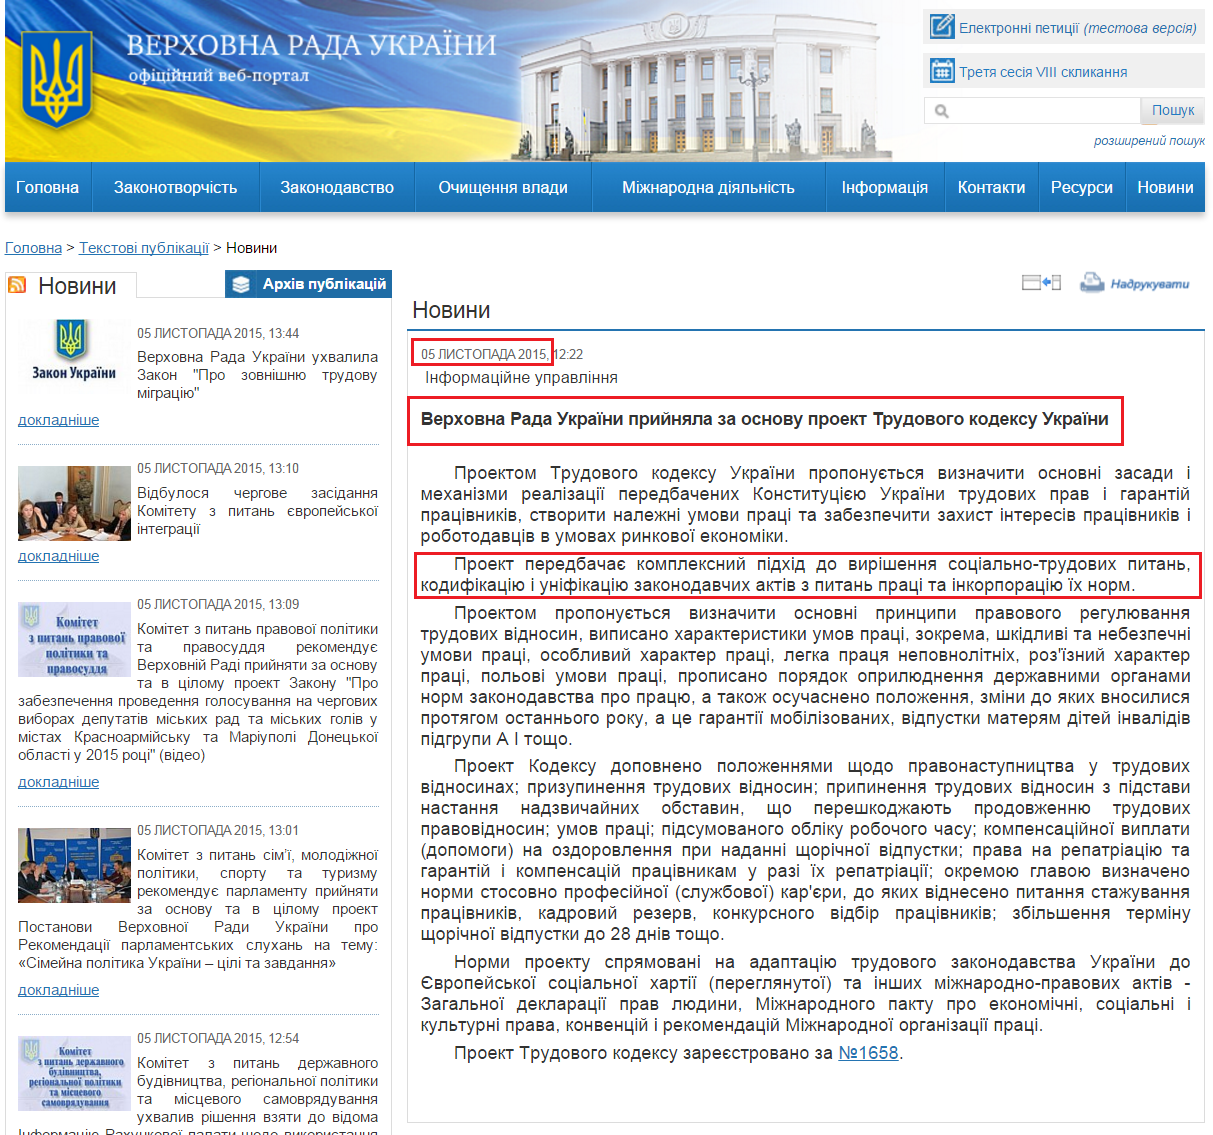 http://rada.gov.ua/news/Novyny/118228.html